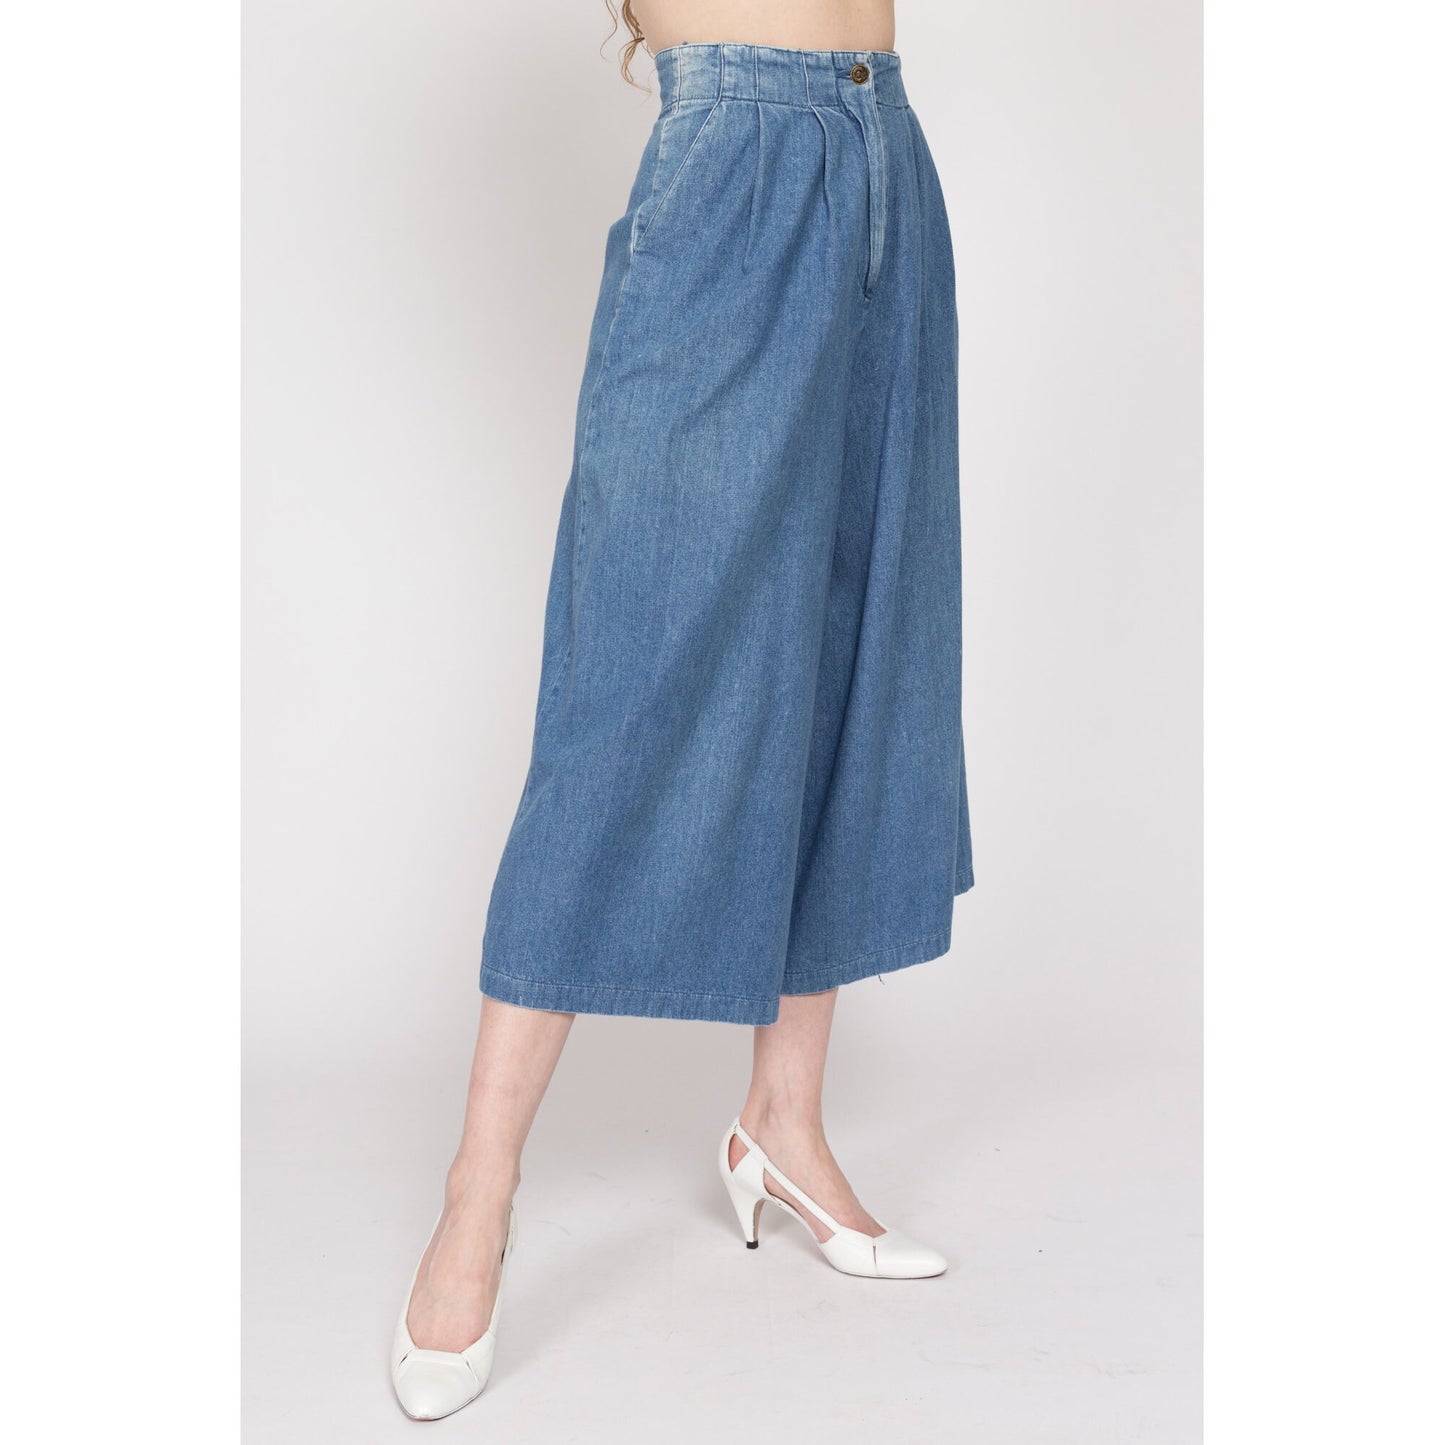 XS 80s Denim Long Culotte Shorts 25" | Vintage High Waisted Wide Leg Blue Jean Pocket Capri Pants